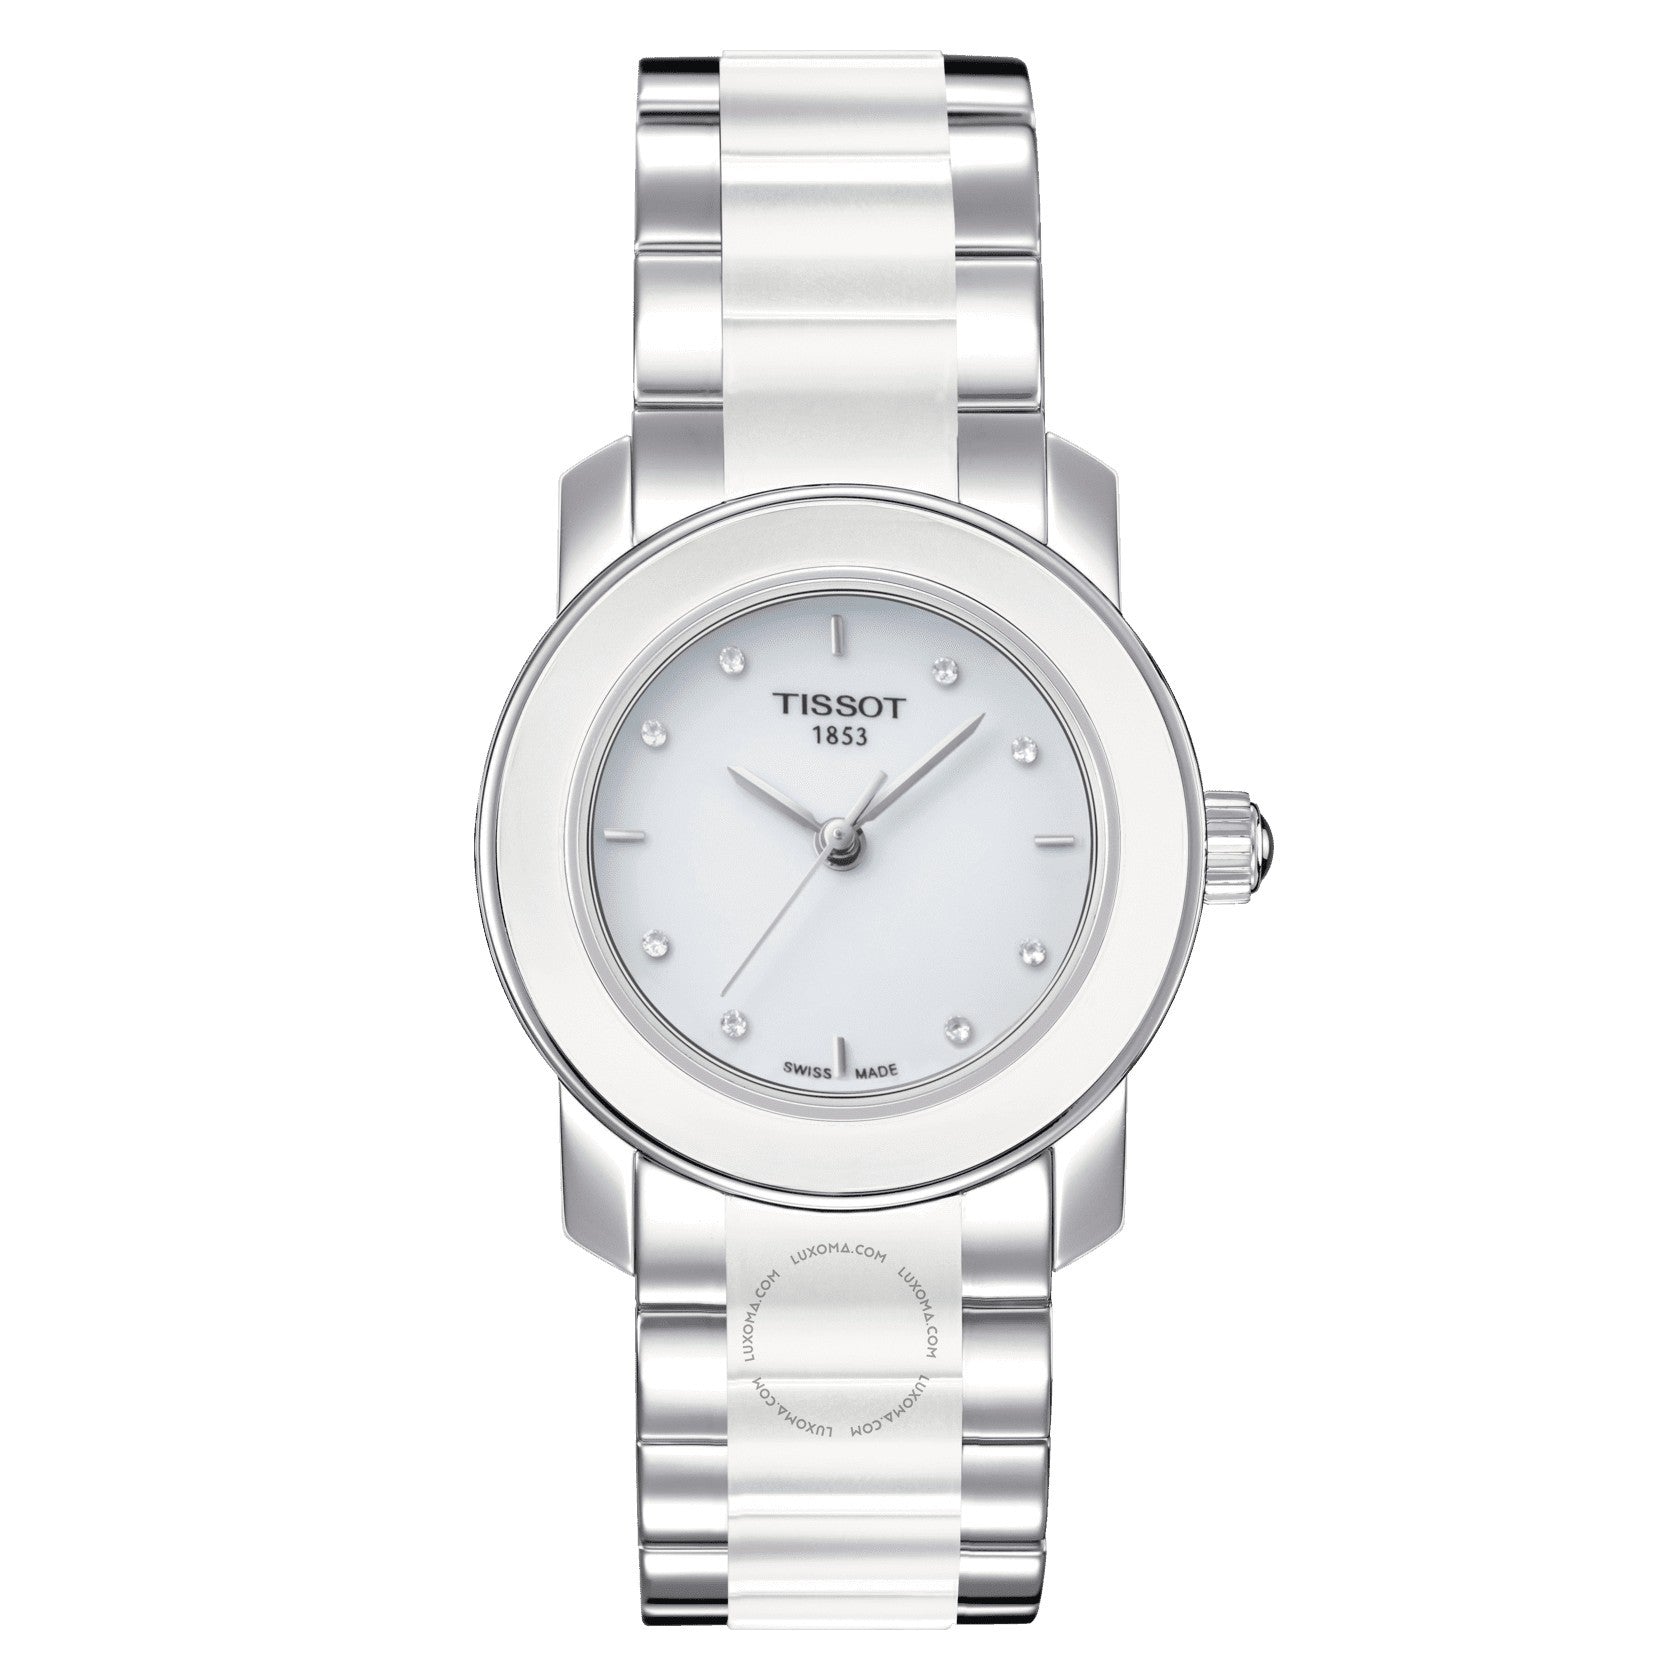 Tissot T-Trend Cera Quartz White Dial Ladies Watch T064.210.22.016.00